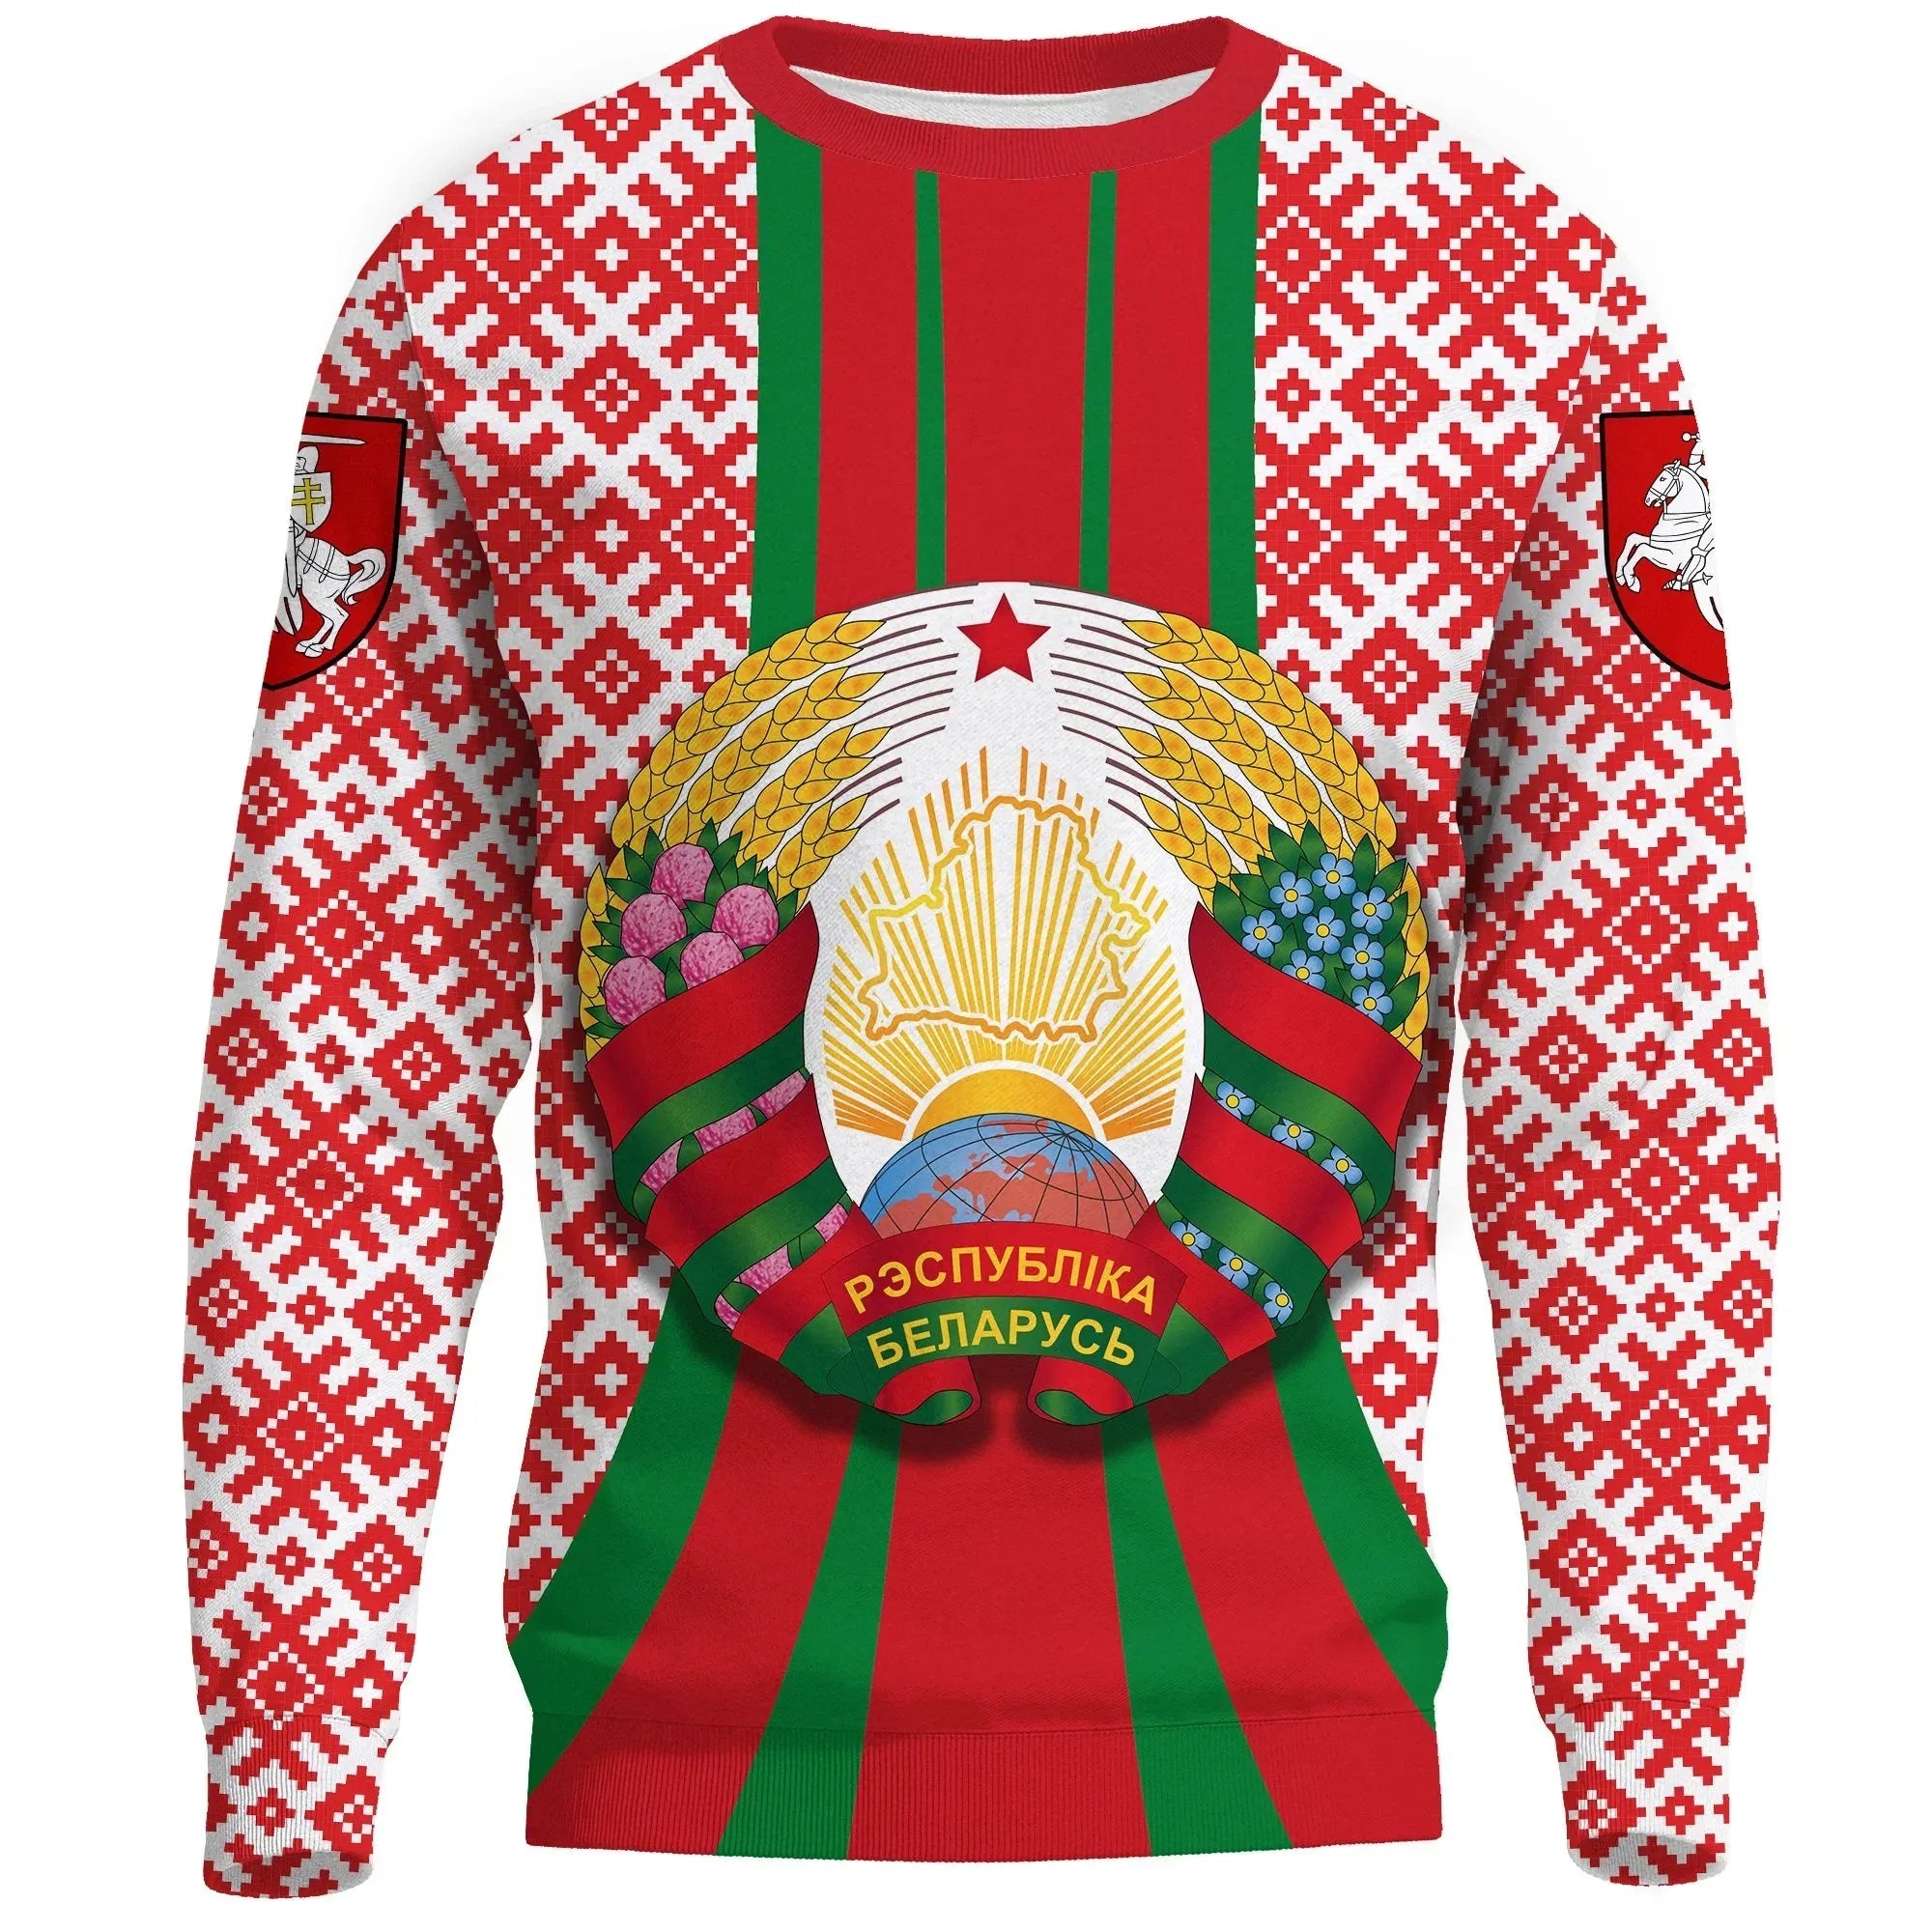 belarus-sweatshirt-victory-day